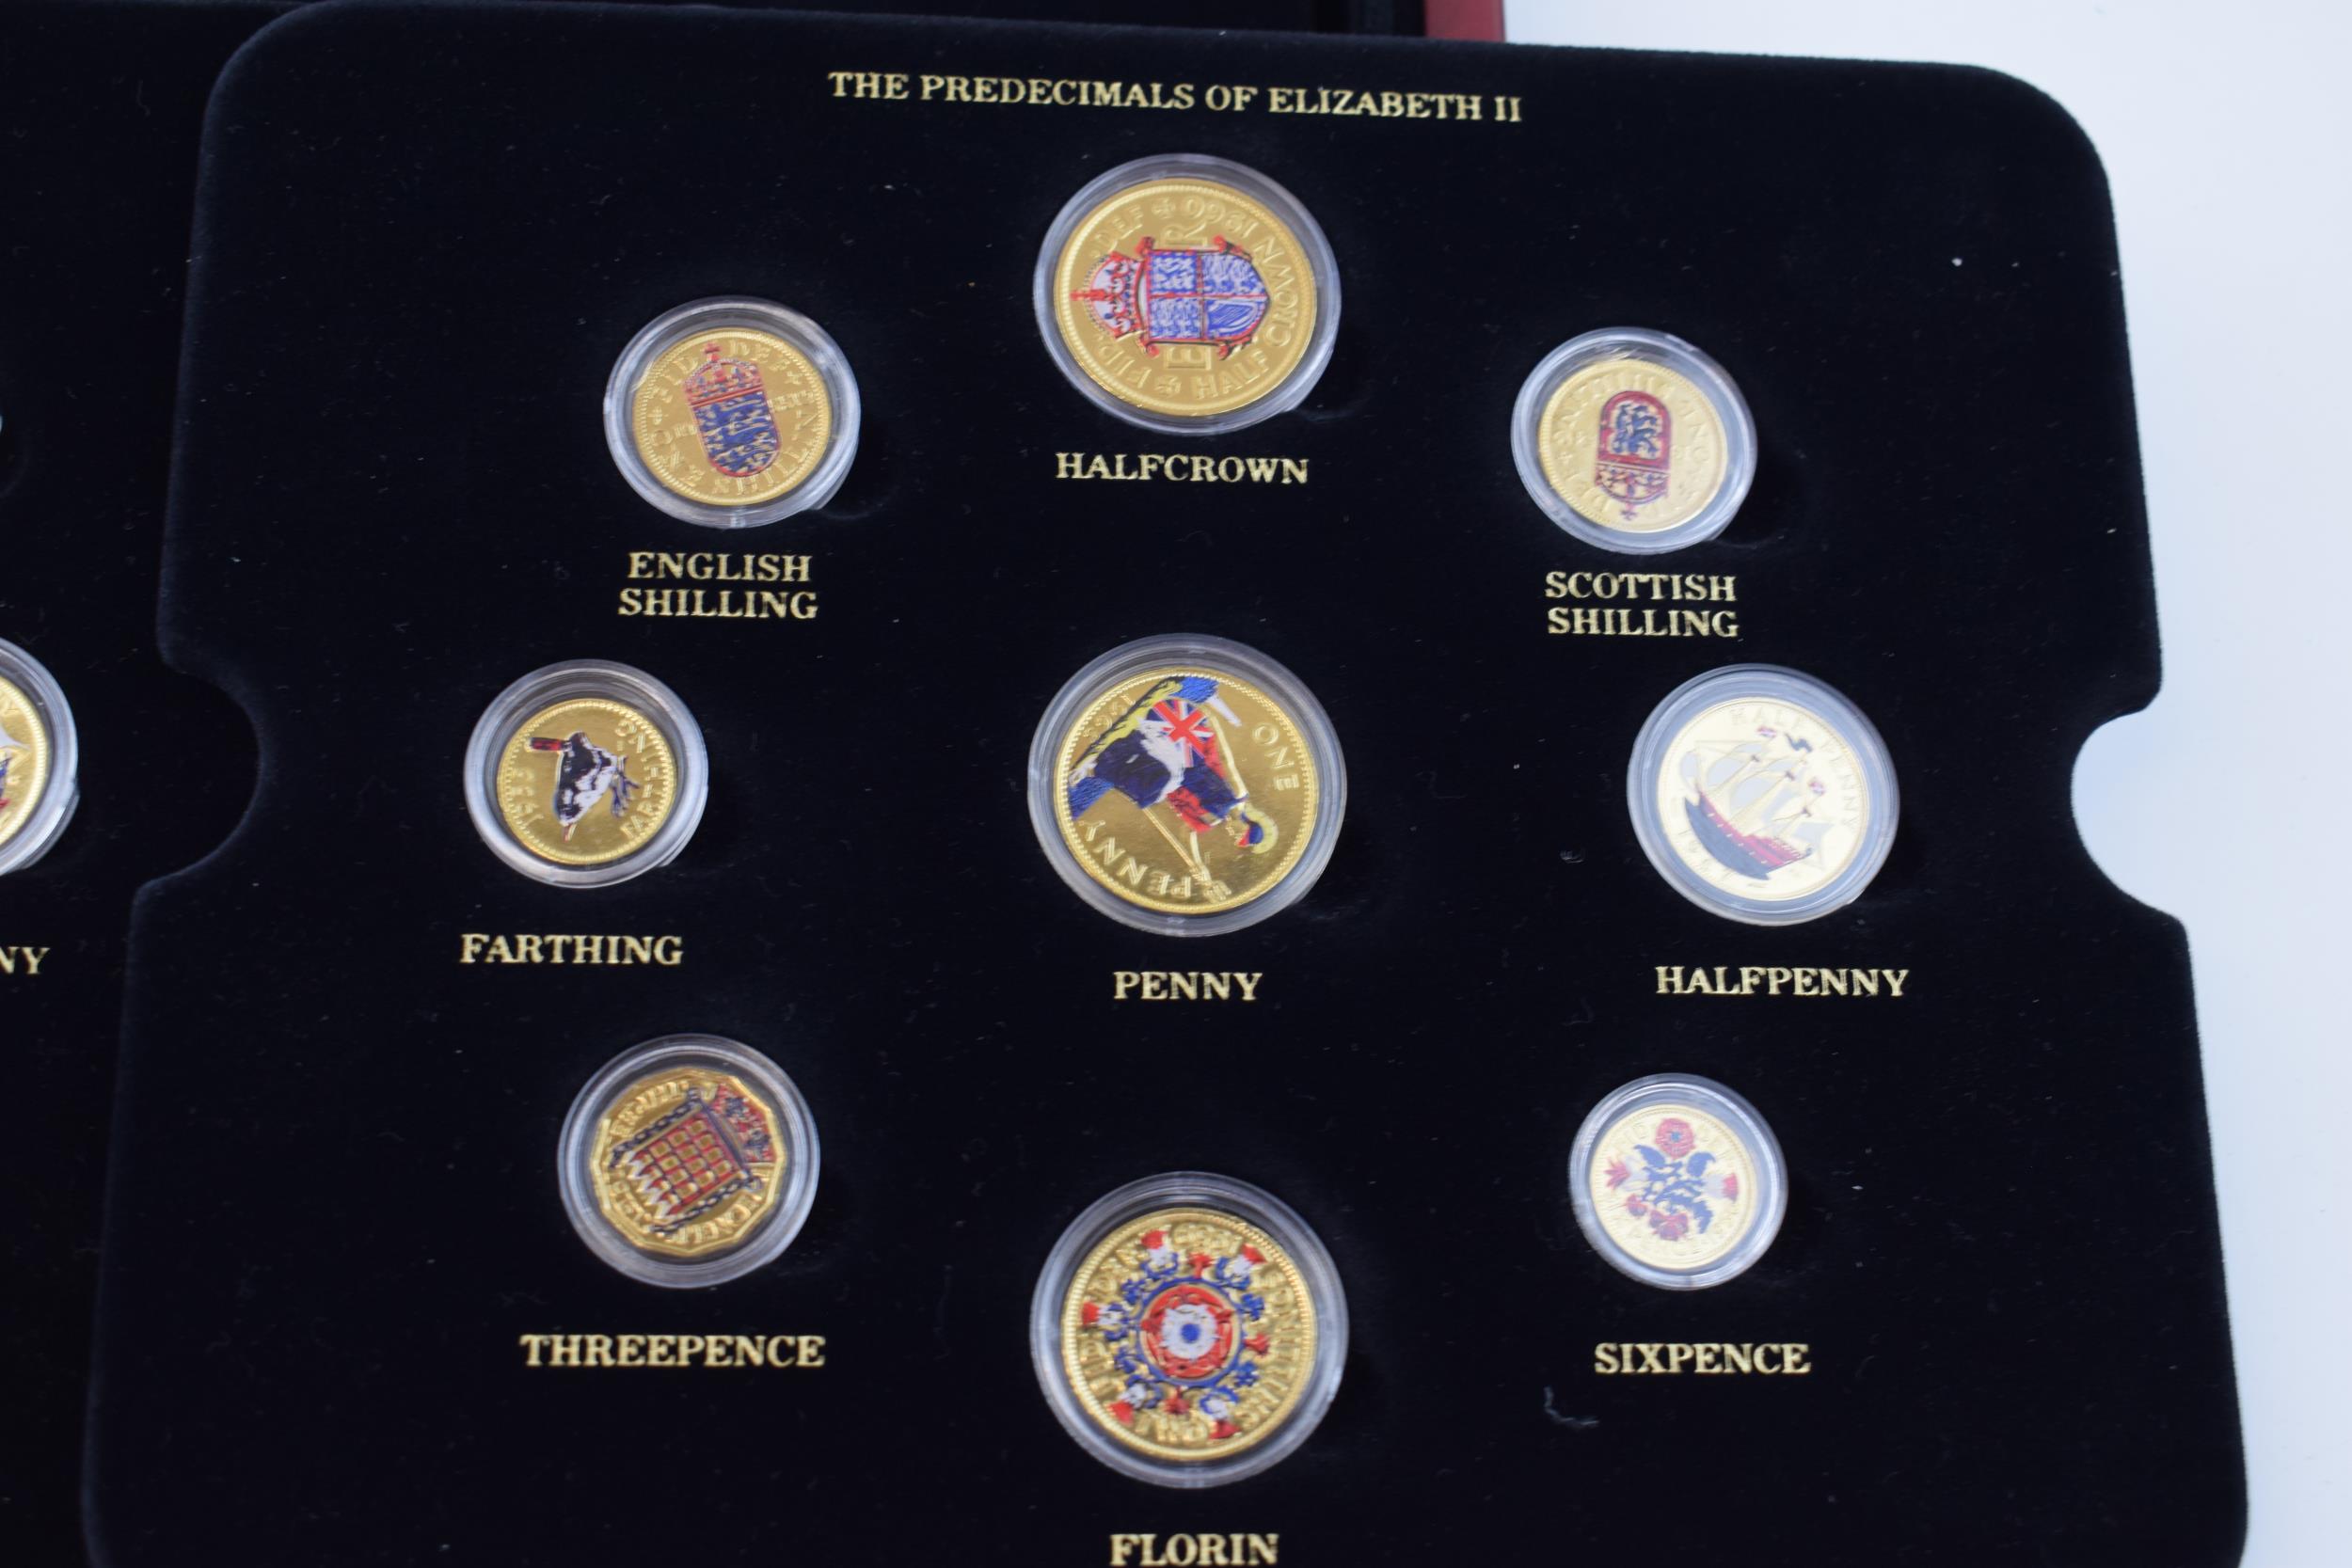 18 commemorative coin collection, the predecimals of George VI and the predecimals of Elizabeth - Image 2 of 6